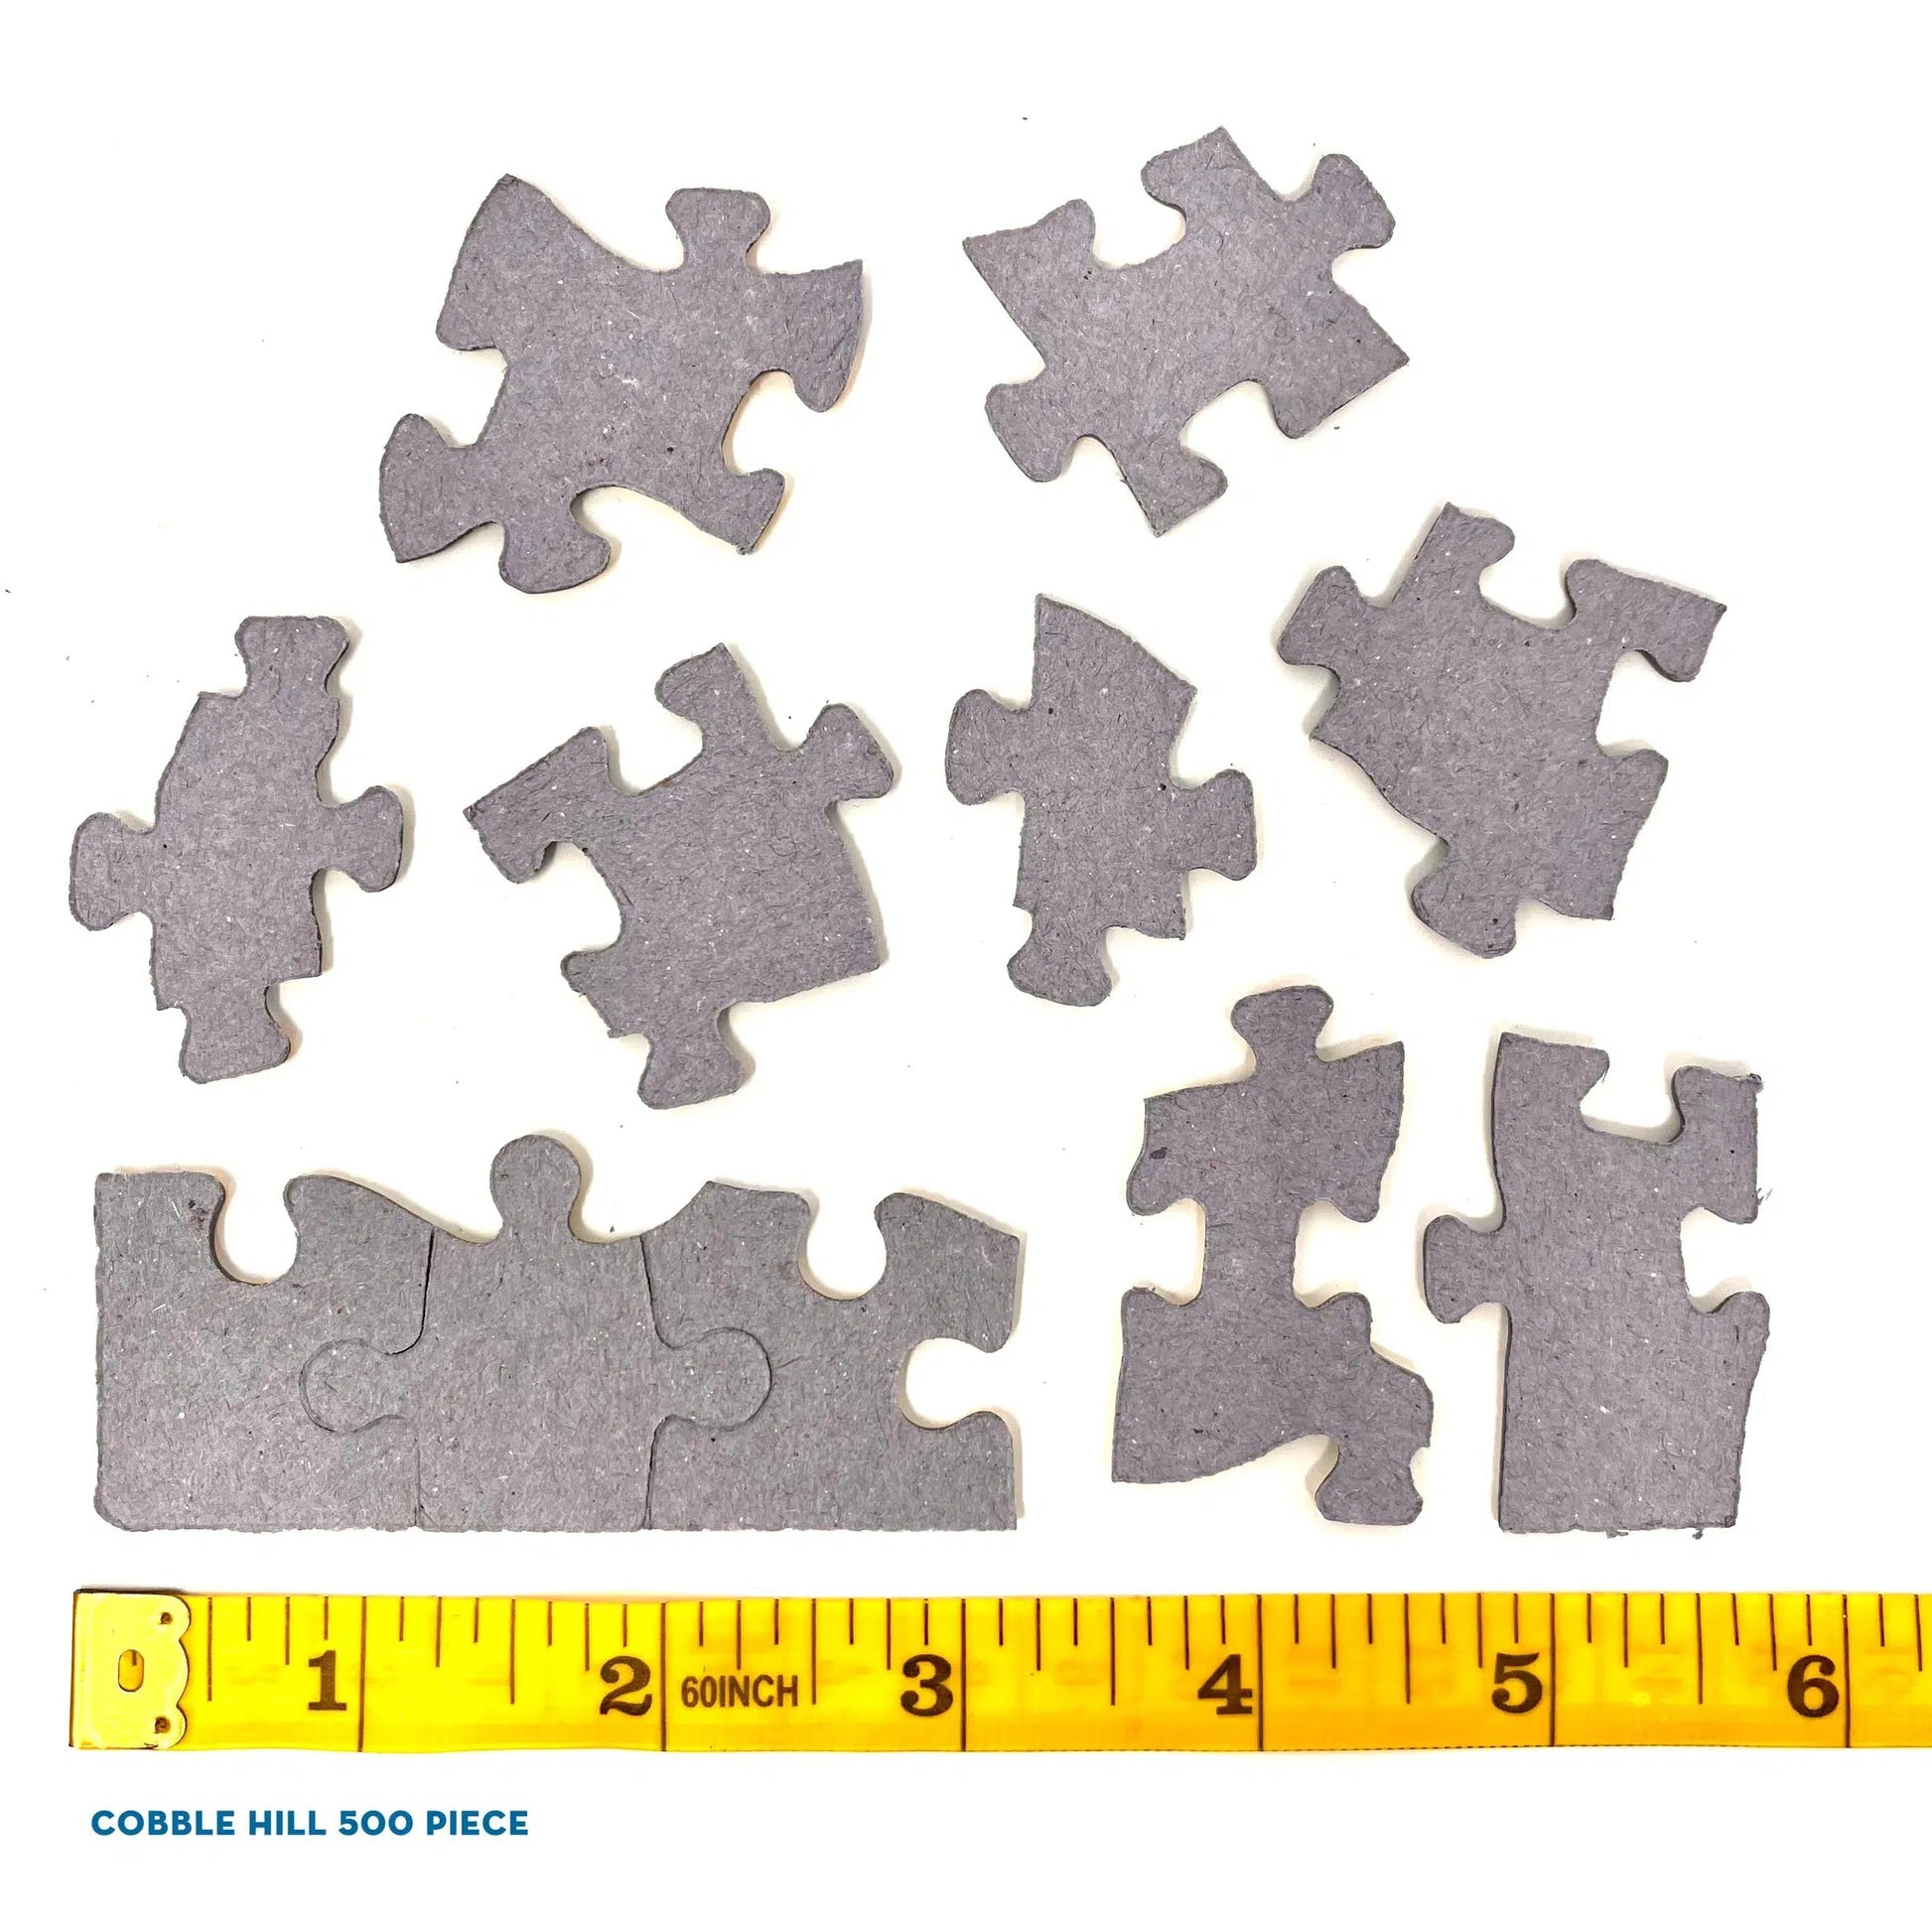 Libra 500 Piece Jigsaw Puzzle Cobble Hill